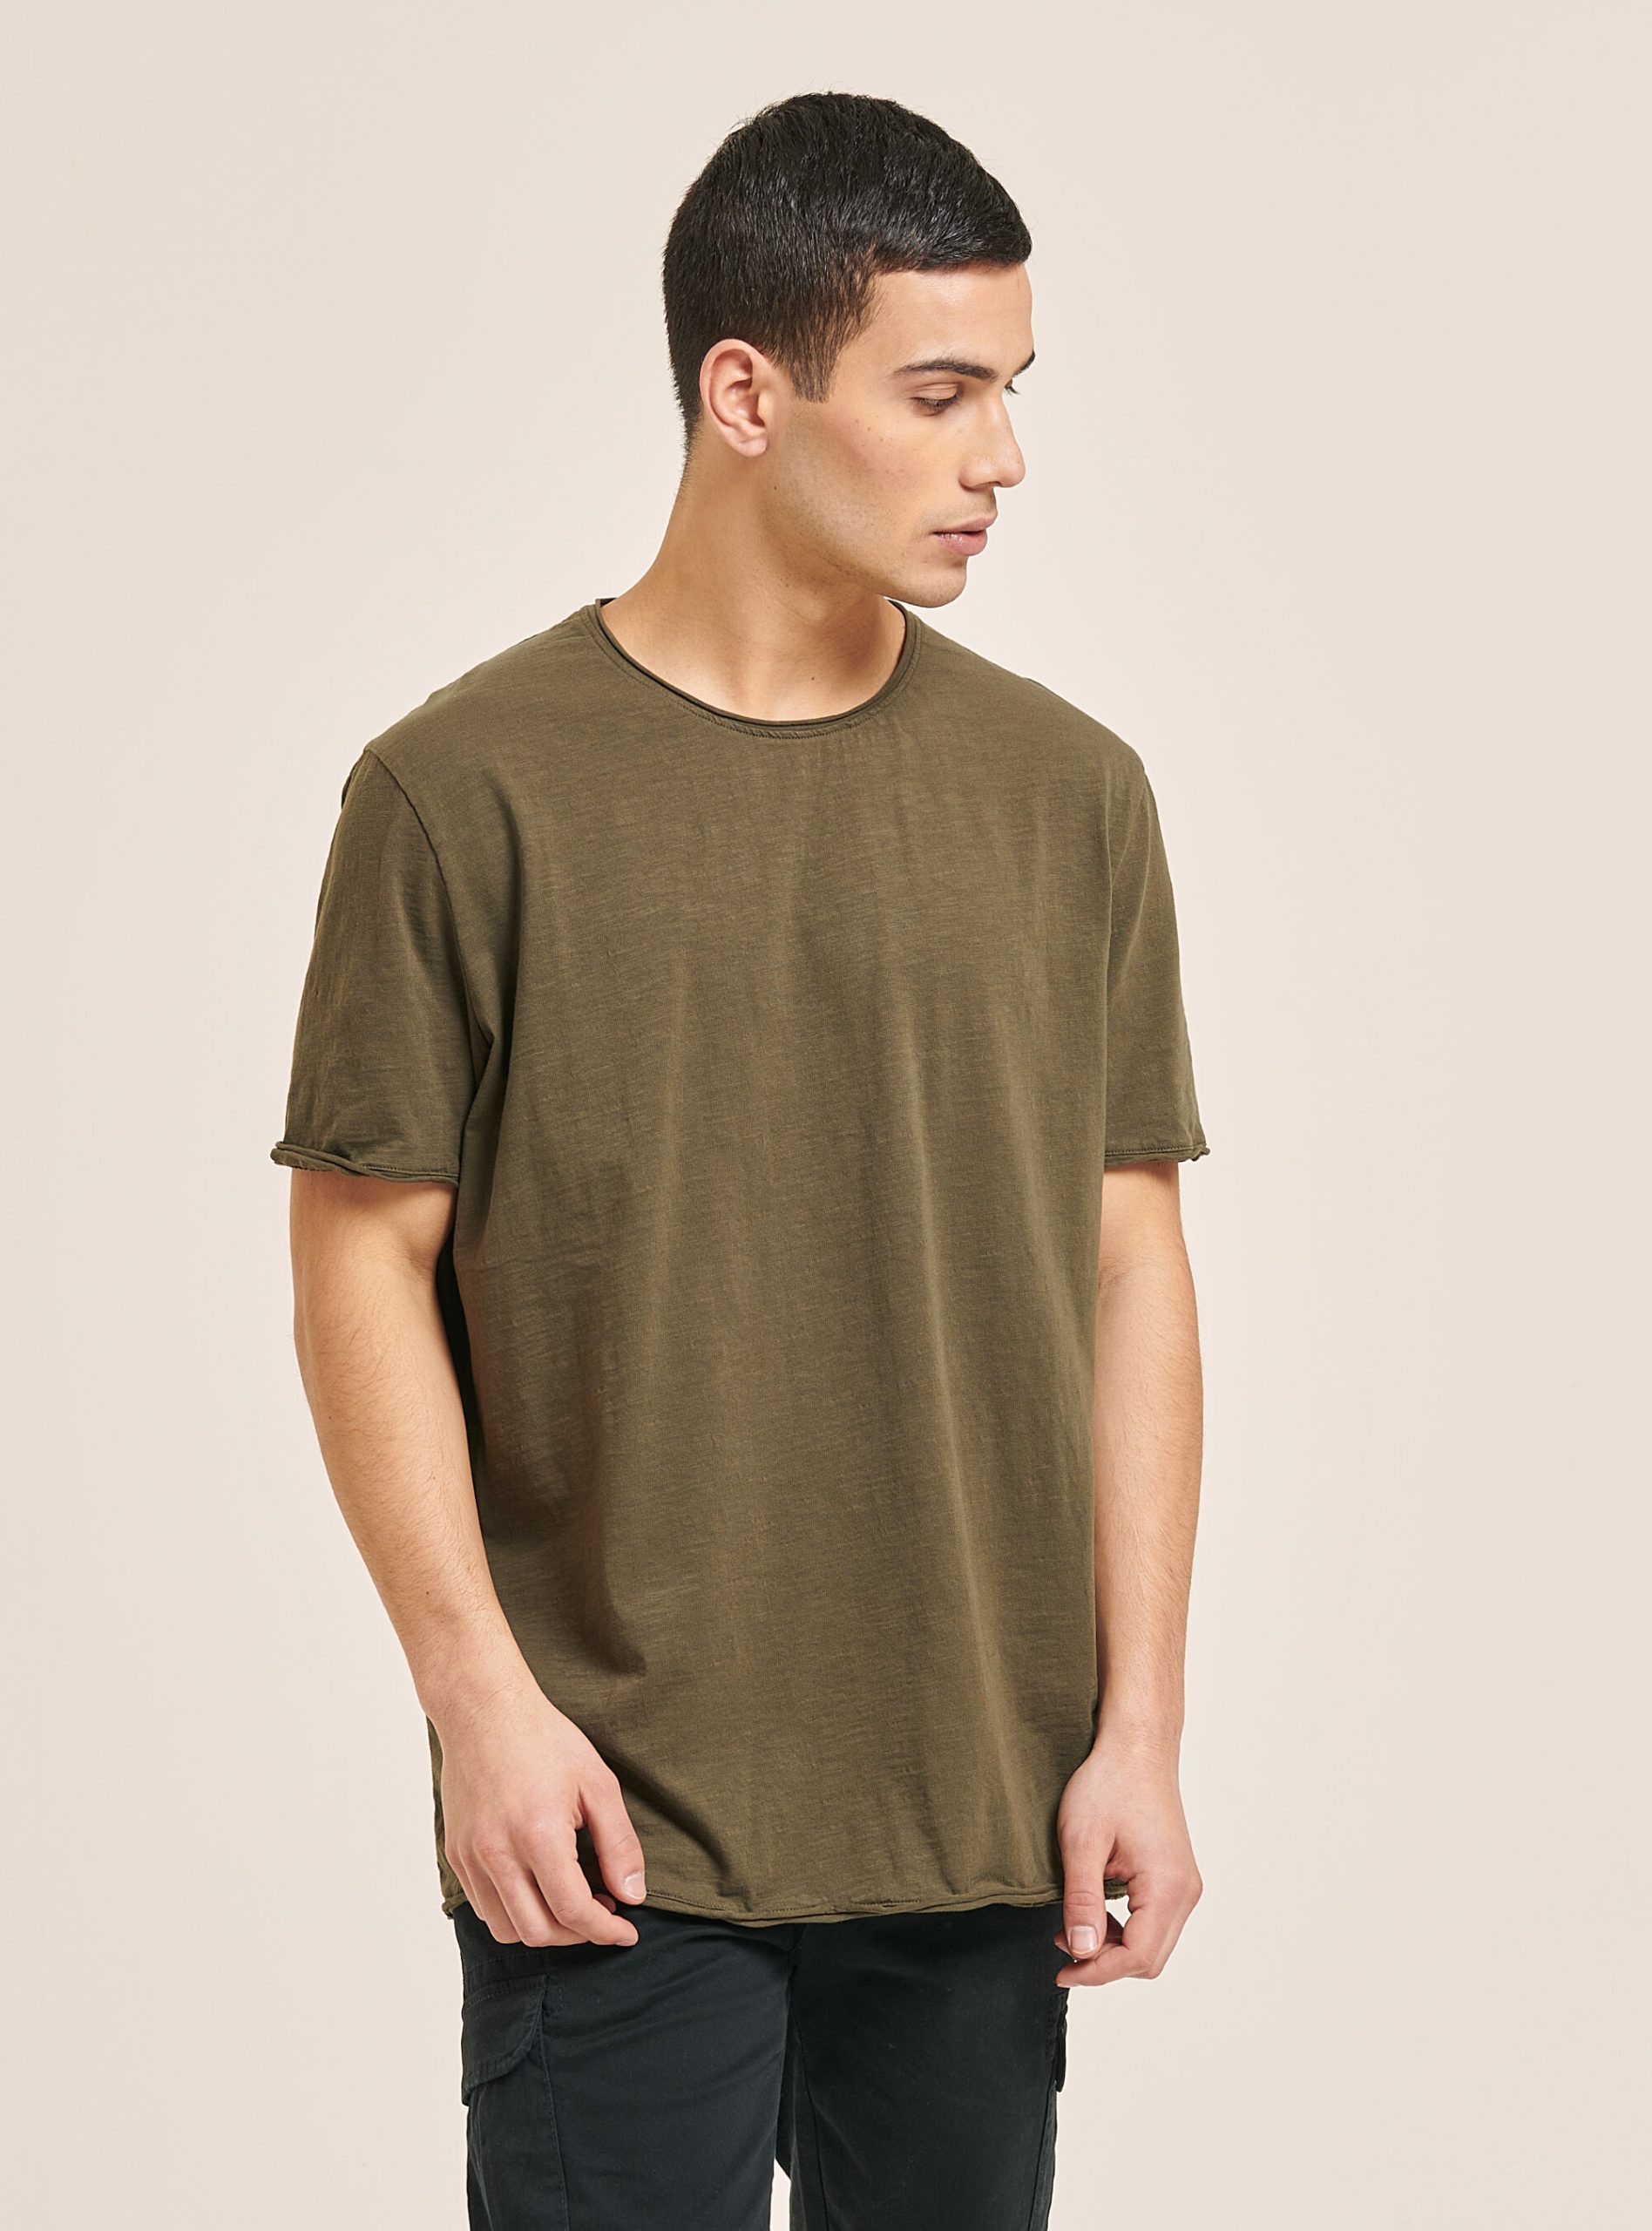 T-Shirts Billig Männer Einfarbiges T-Shirt Aus Baumwolle Alcott C6609 Kaky – 1